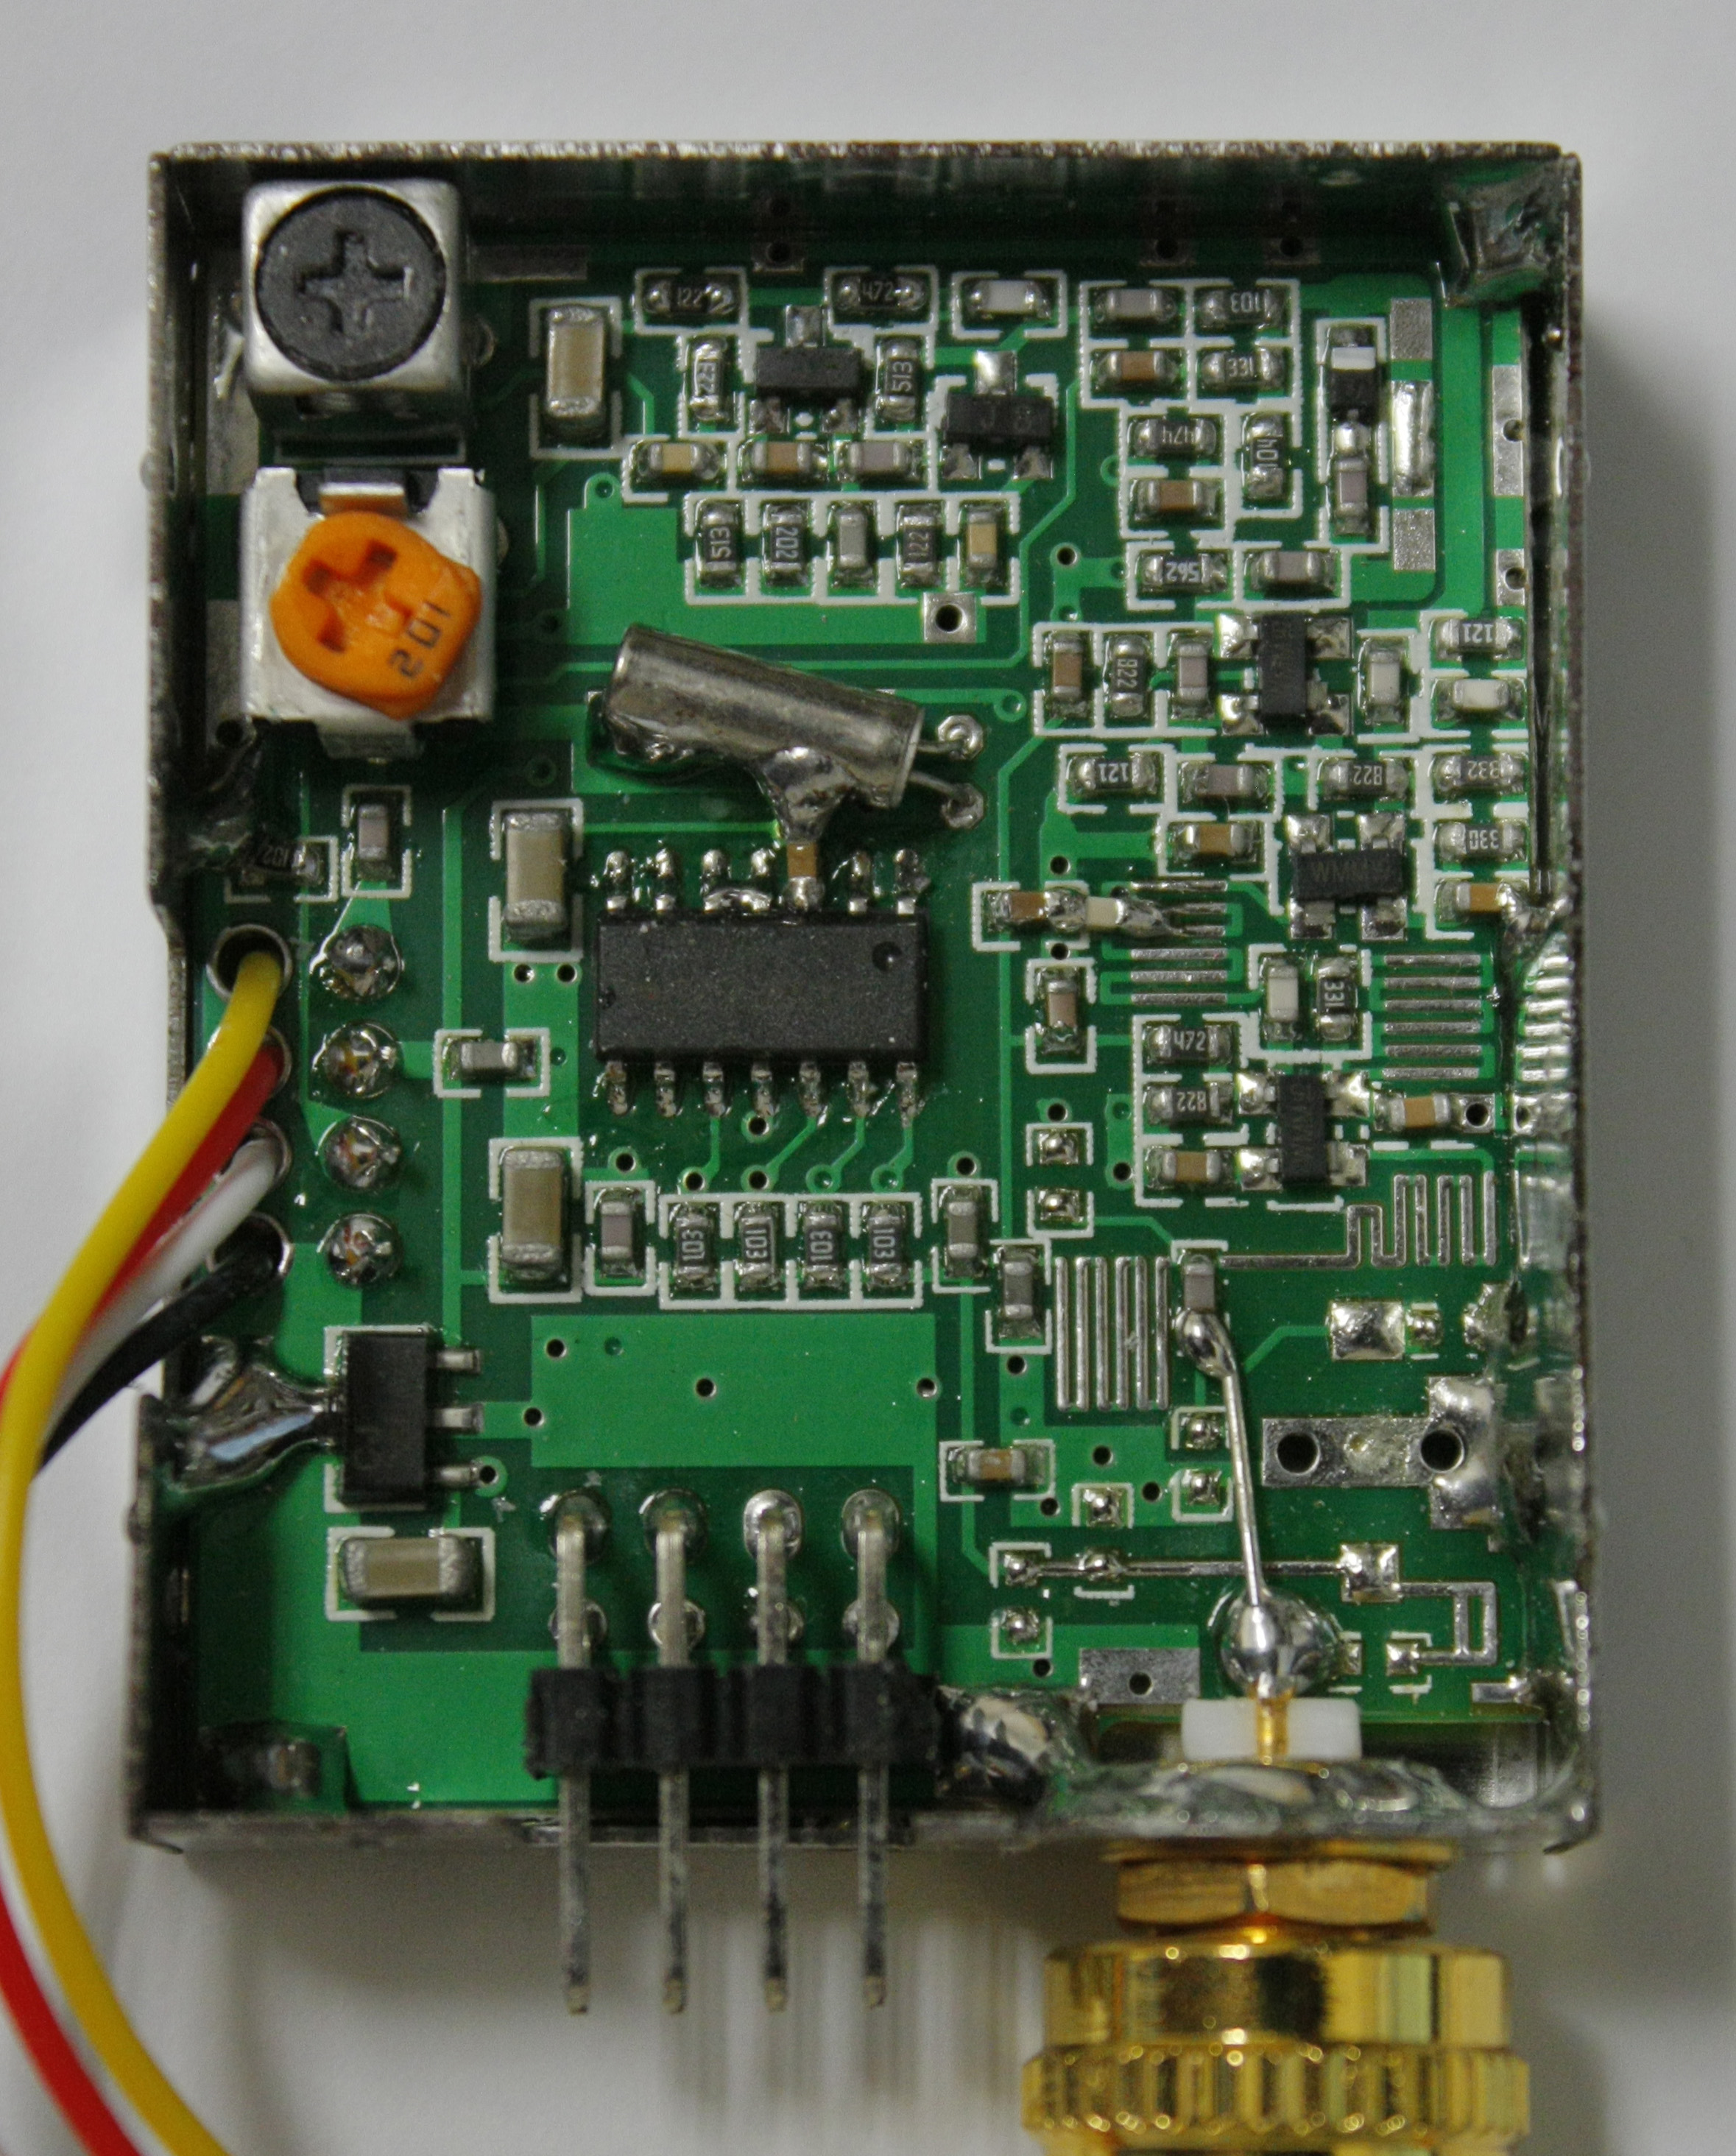 Internals of the video transmitter